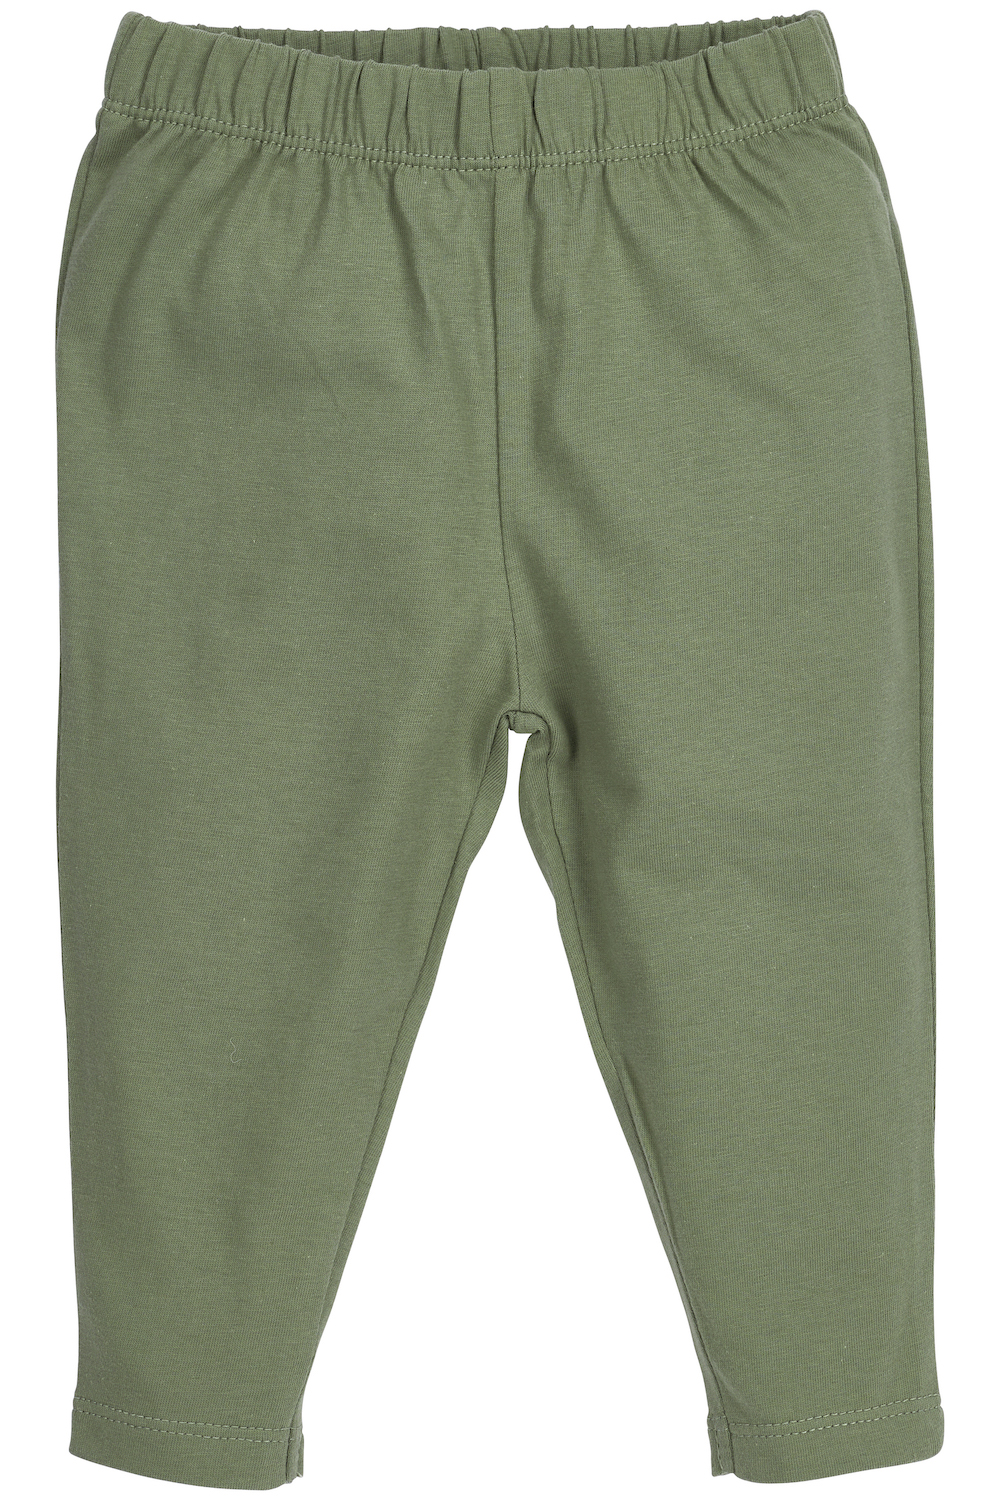 Baby Pyjama 2er pack Cheetah - forest green - 50/56